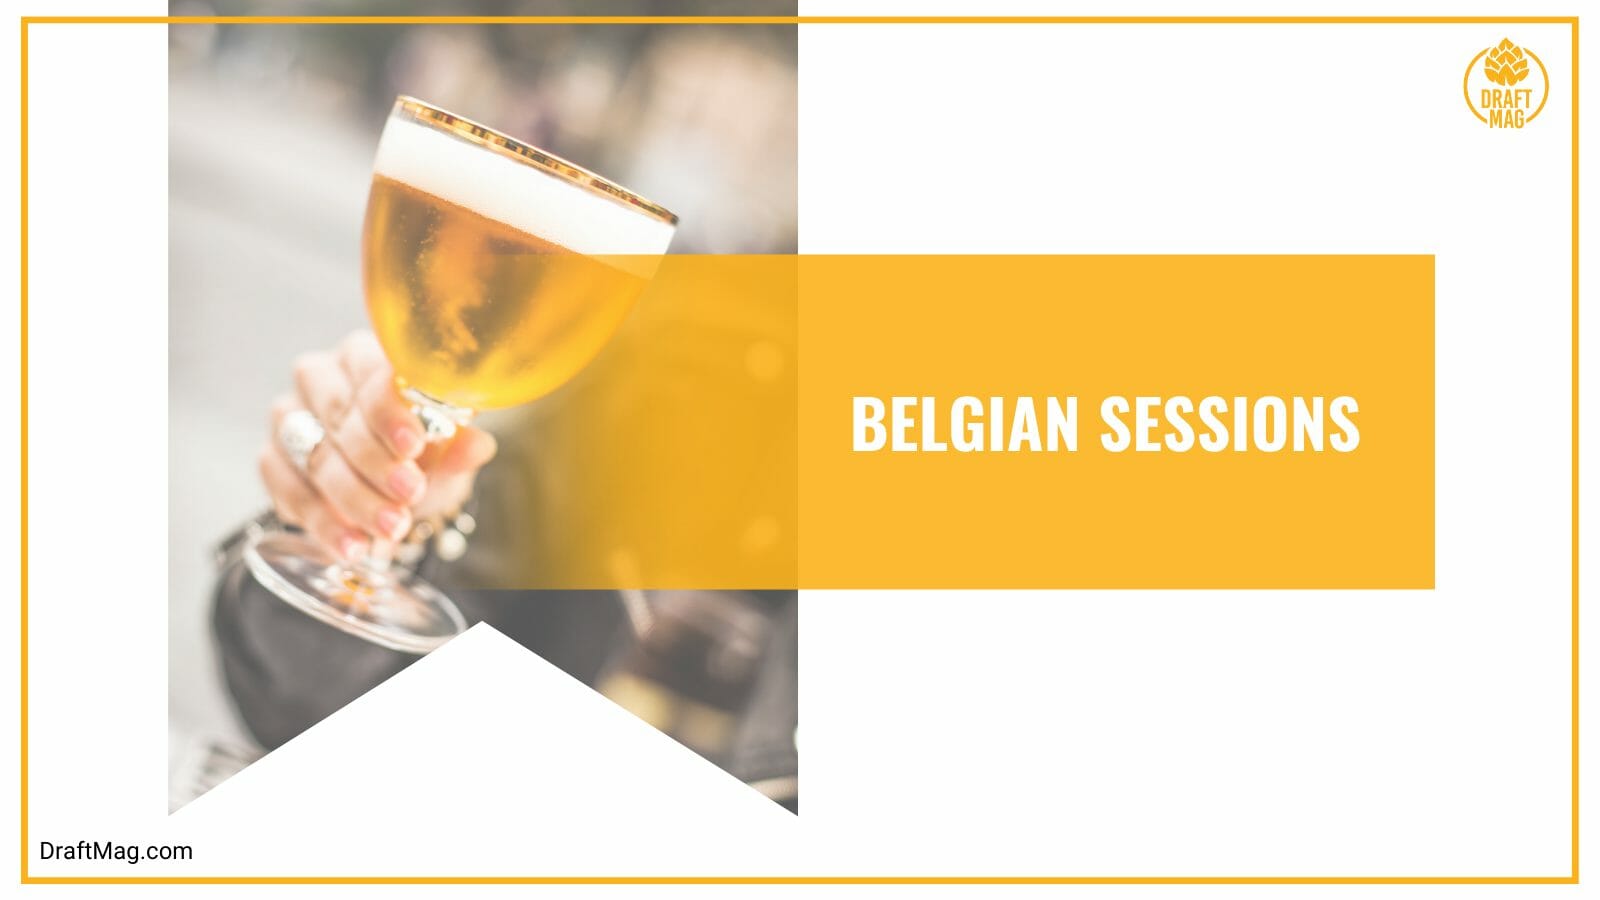 Belgian sessions beer